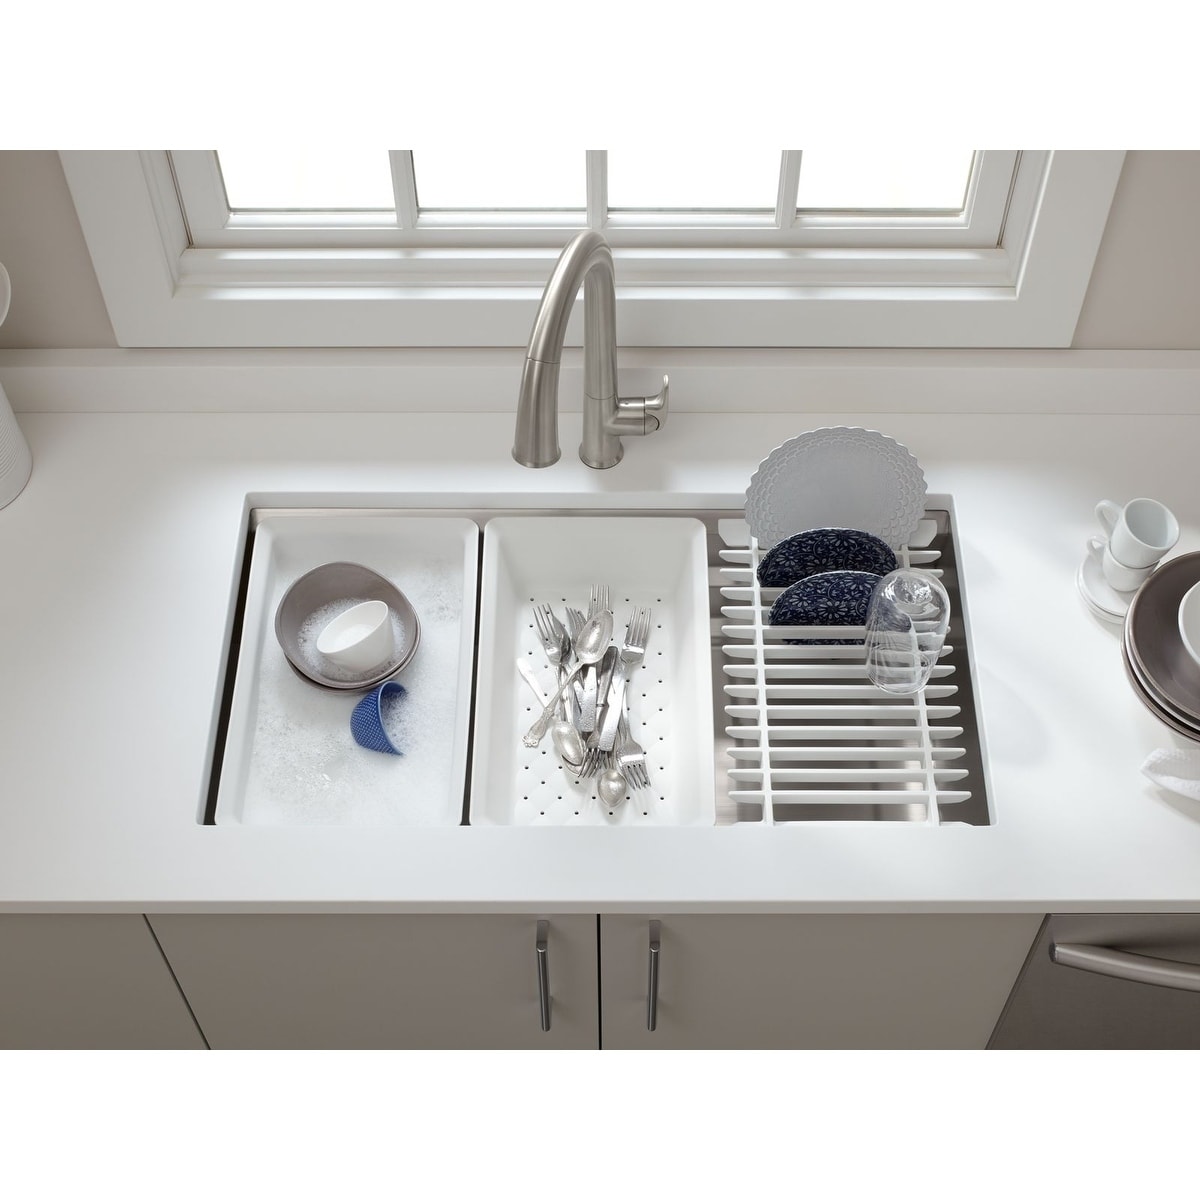 Kohler Prolific 33 X 17 3 4 X 10 15 16 Undermount Single Bowl Kitchen Sink With Accessories K 5540 Na Overstock 22736752